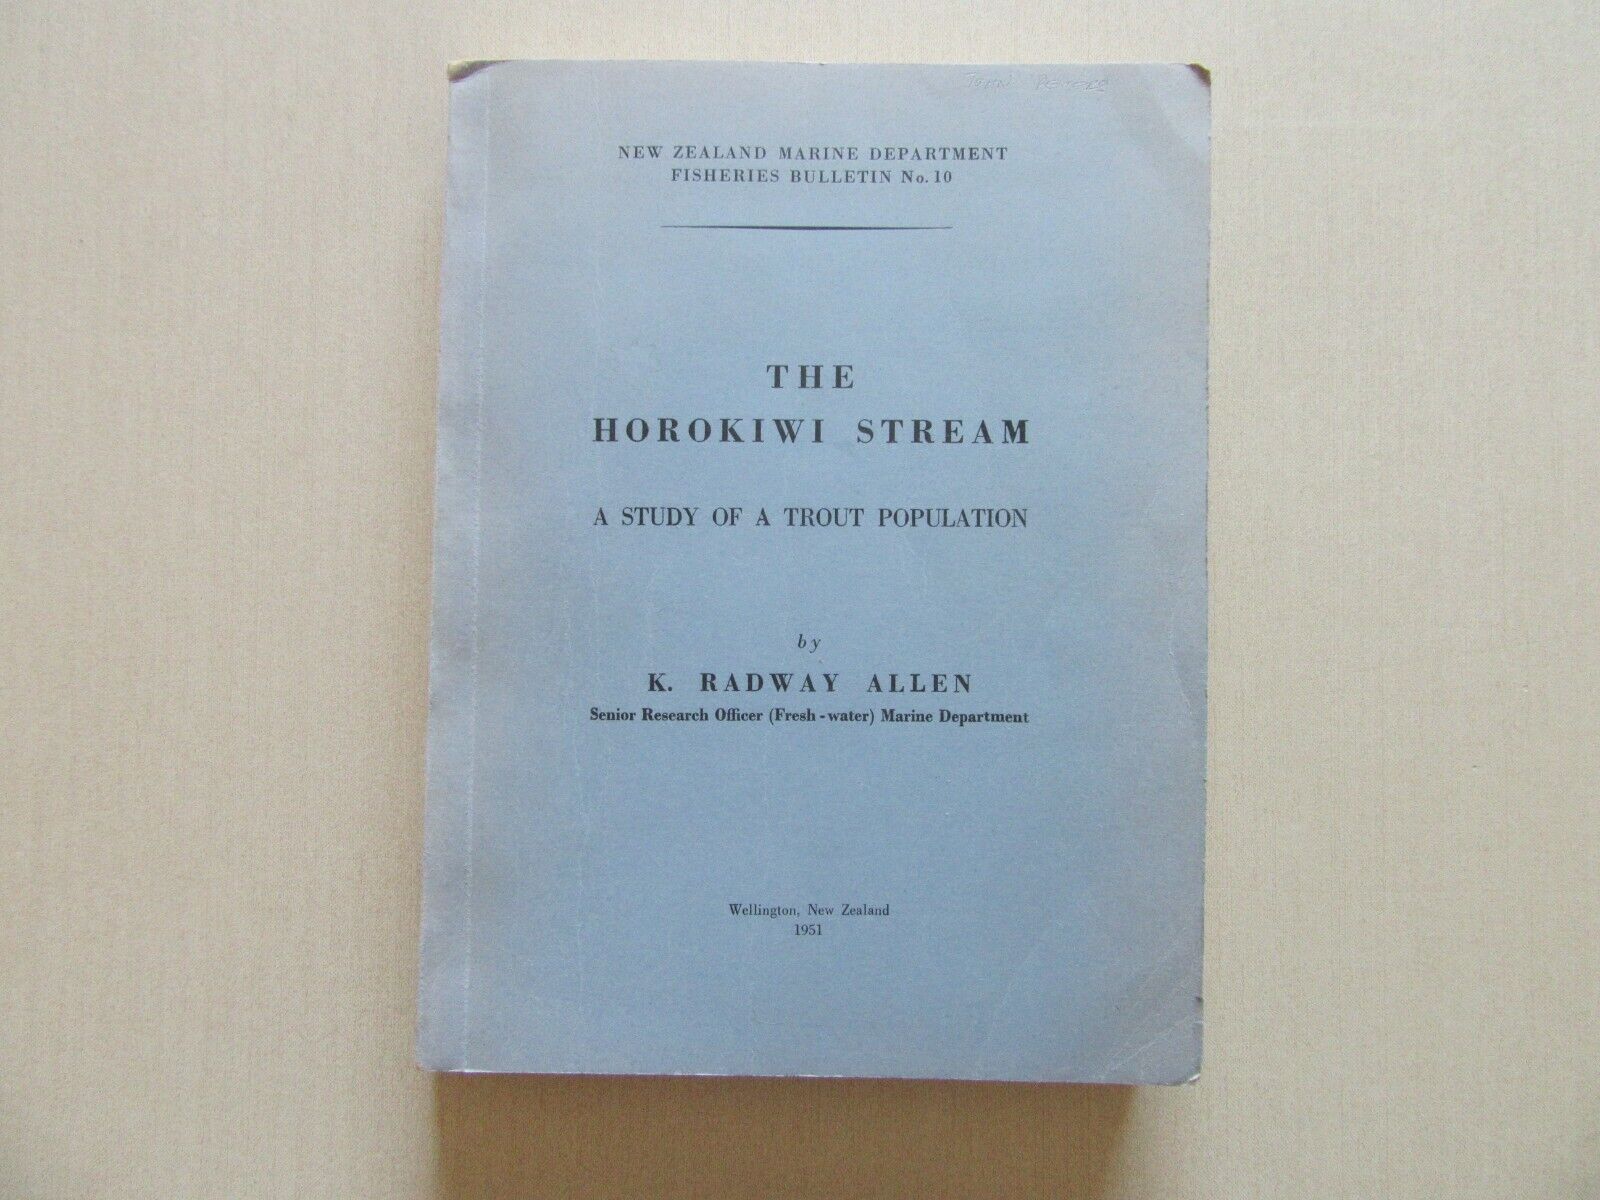 The Horokiwi Stream - Trout Population Study by K. Radway Allen - NZ, 1951